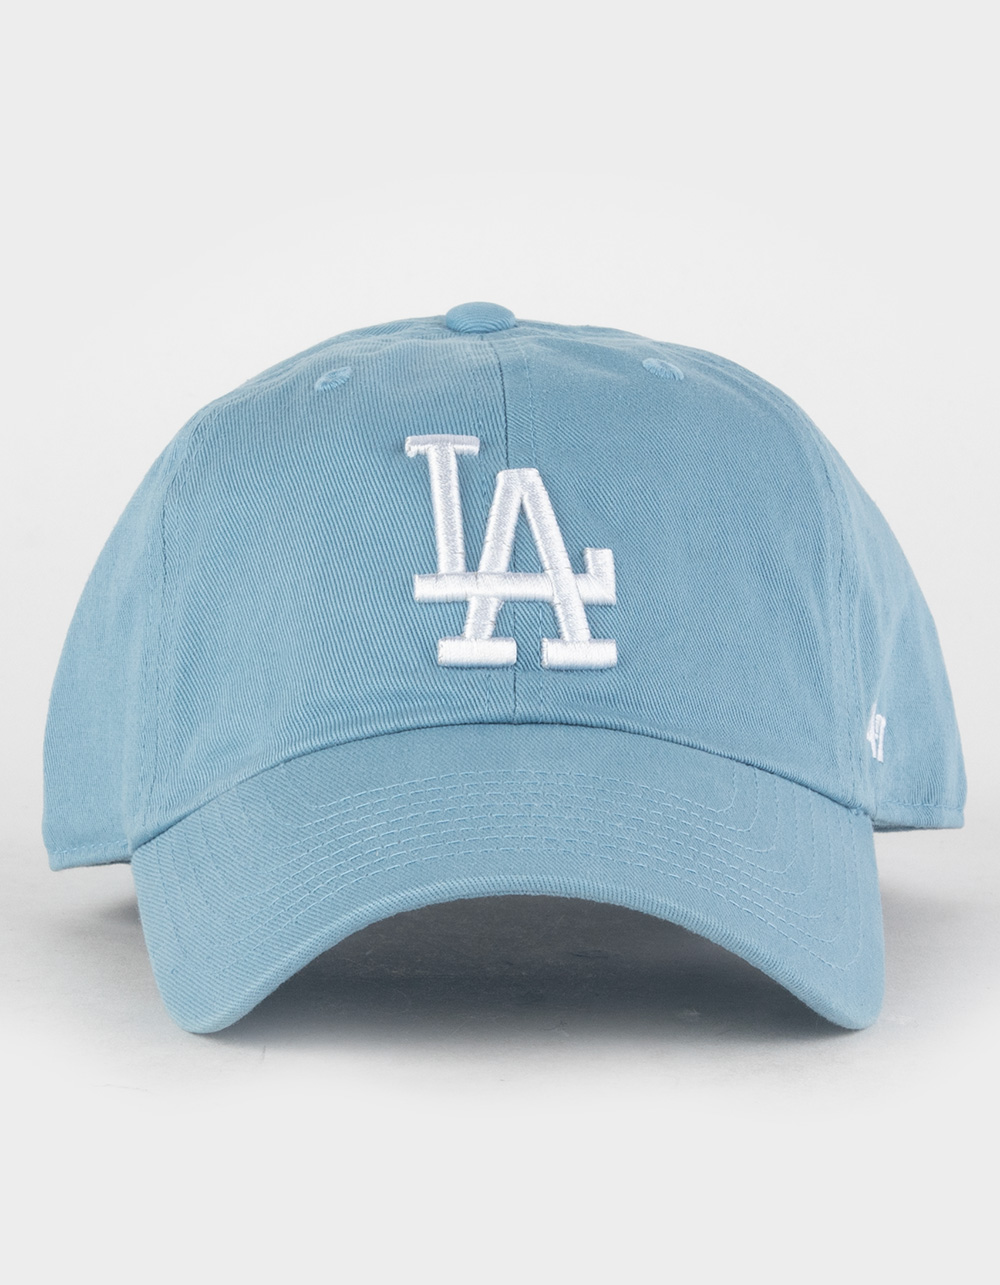 Disneyland (Los Angeles Dodgers BLUE style) (Large) Limited